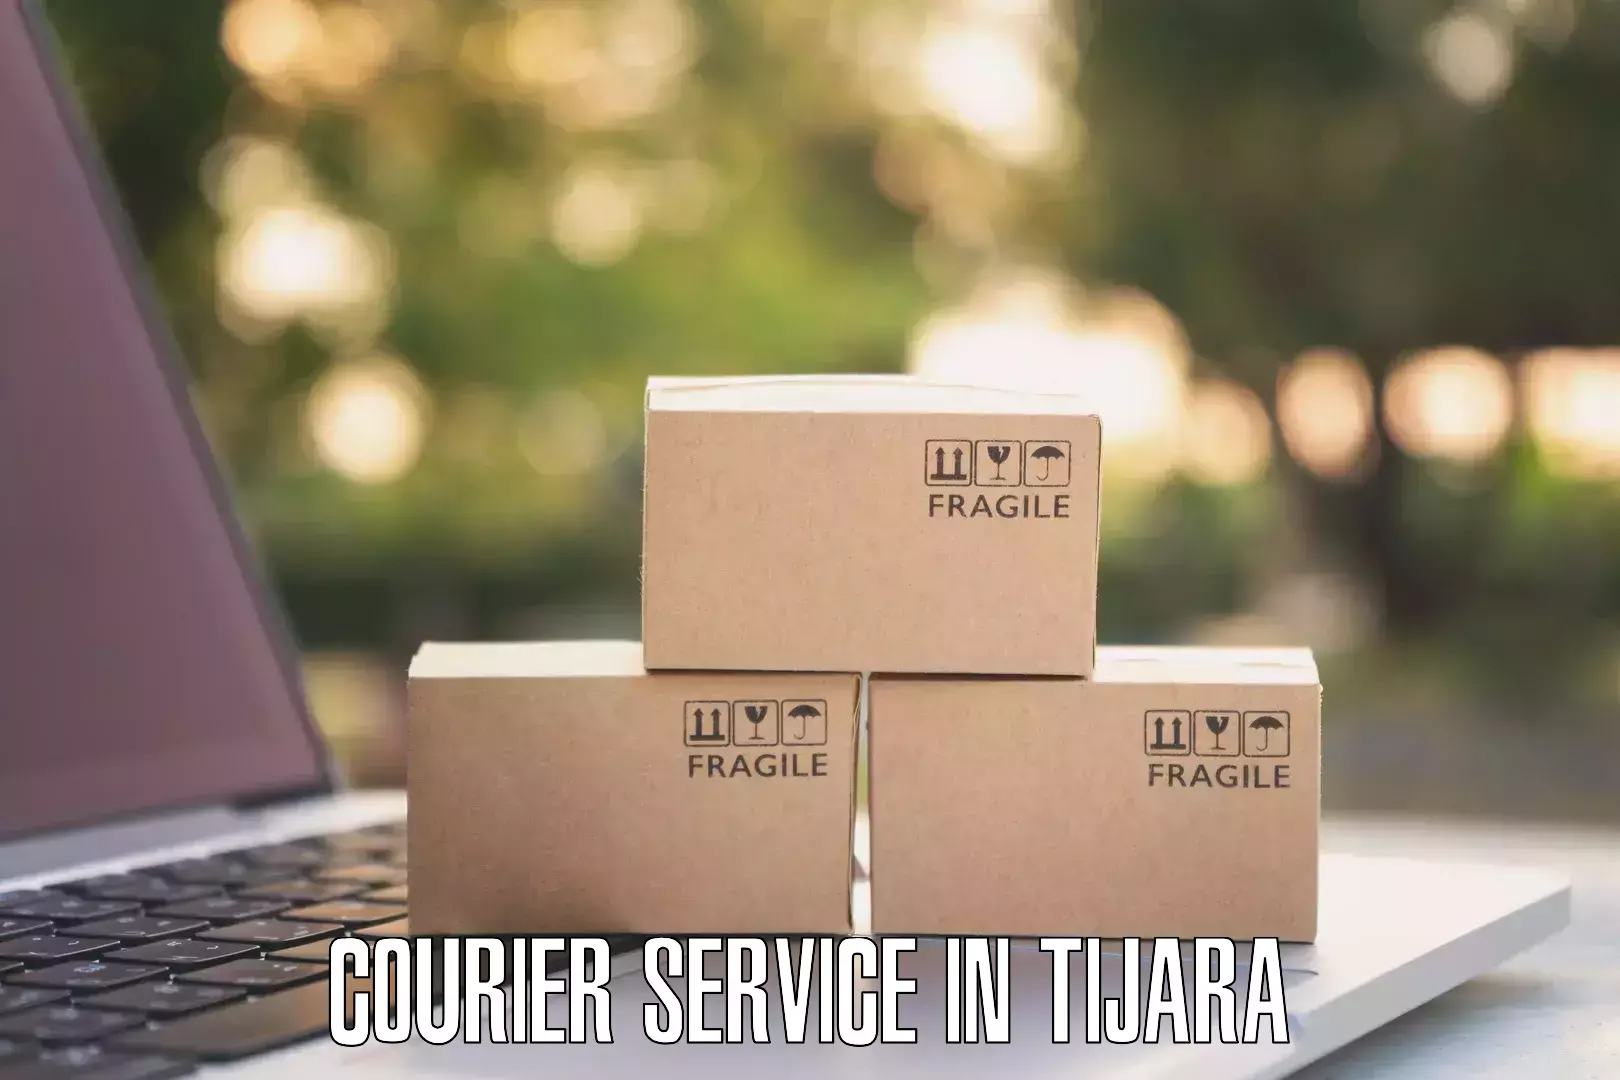 Efficient cargo services in Tijara